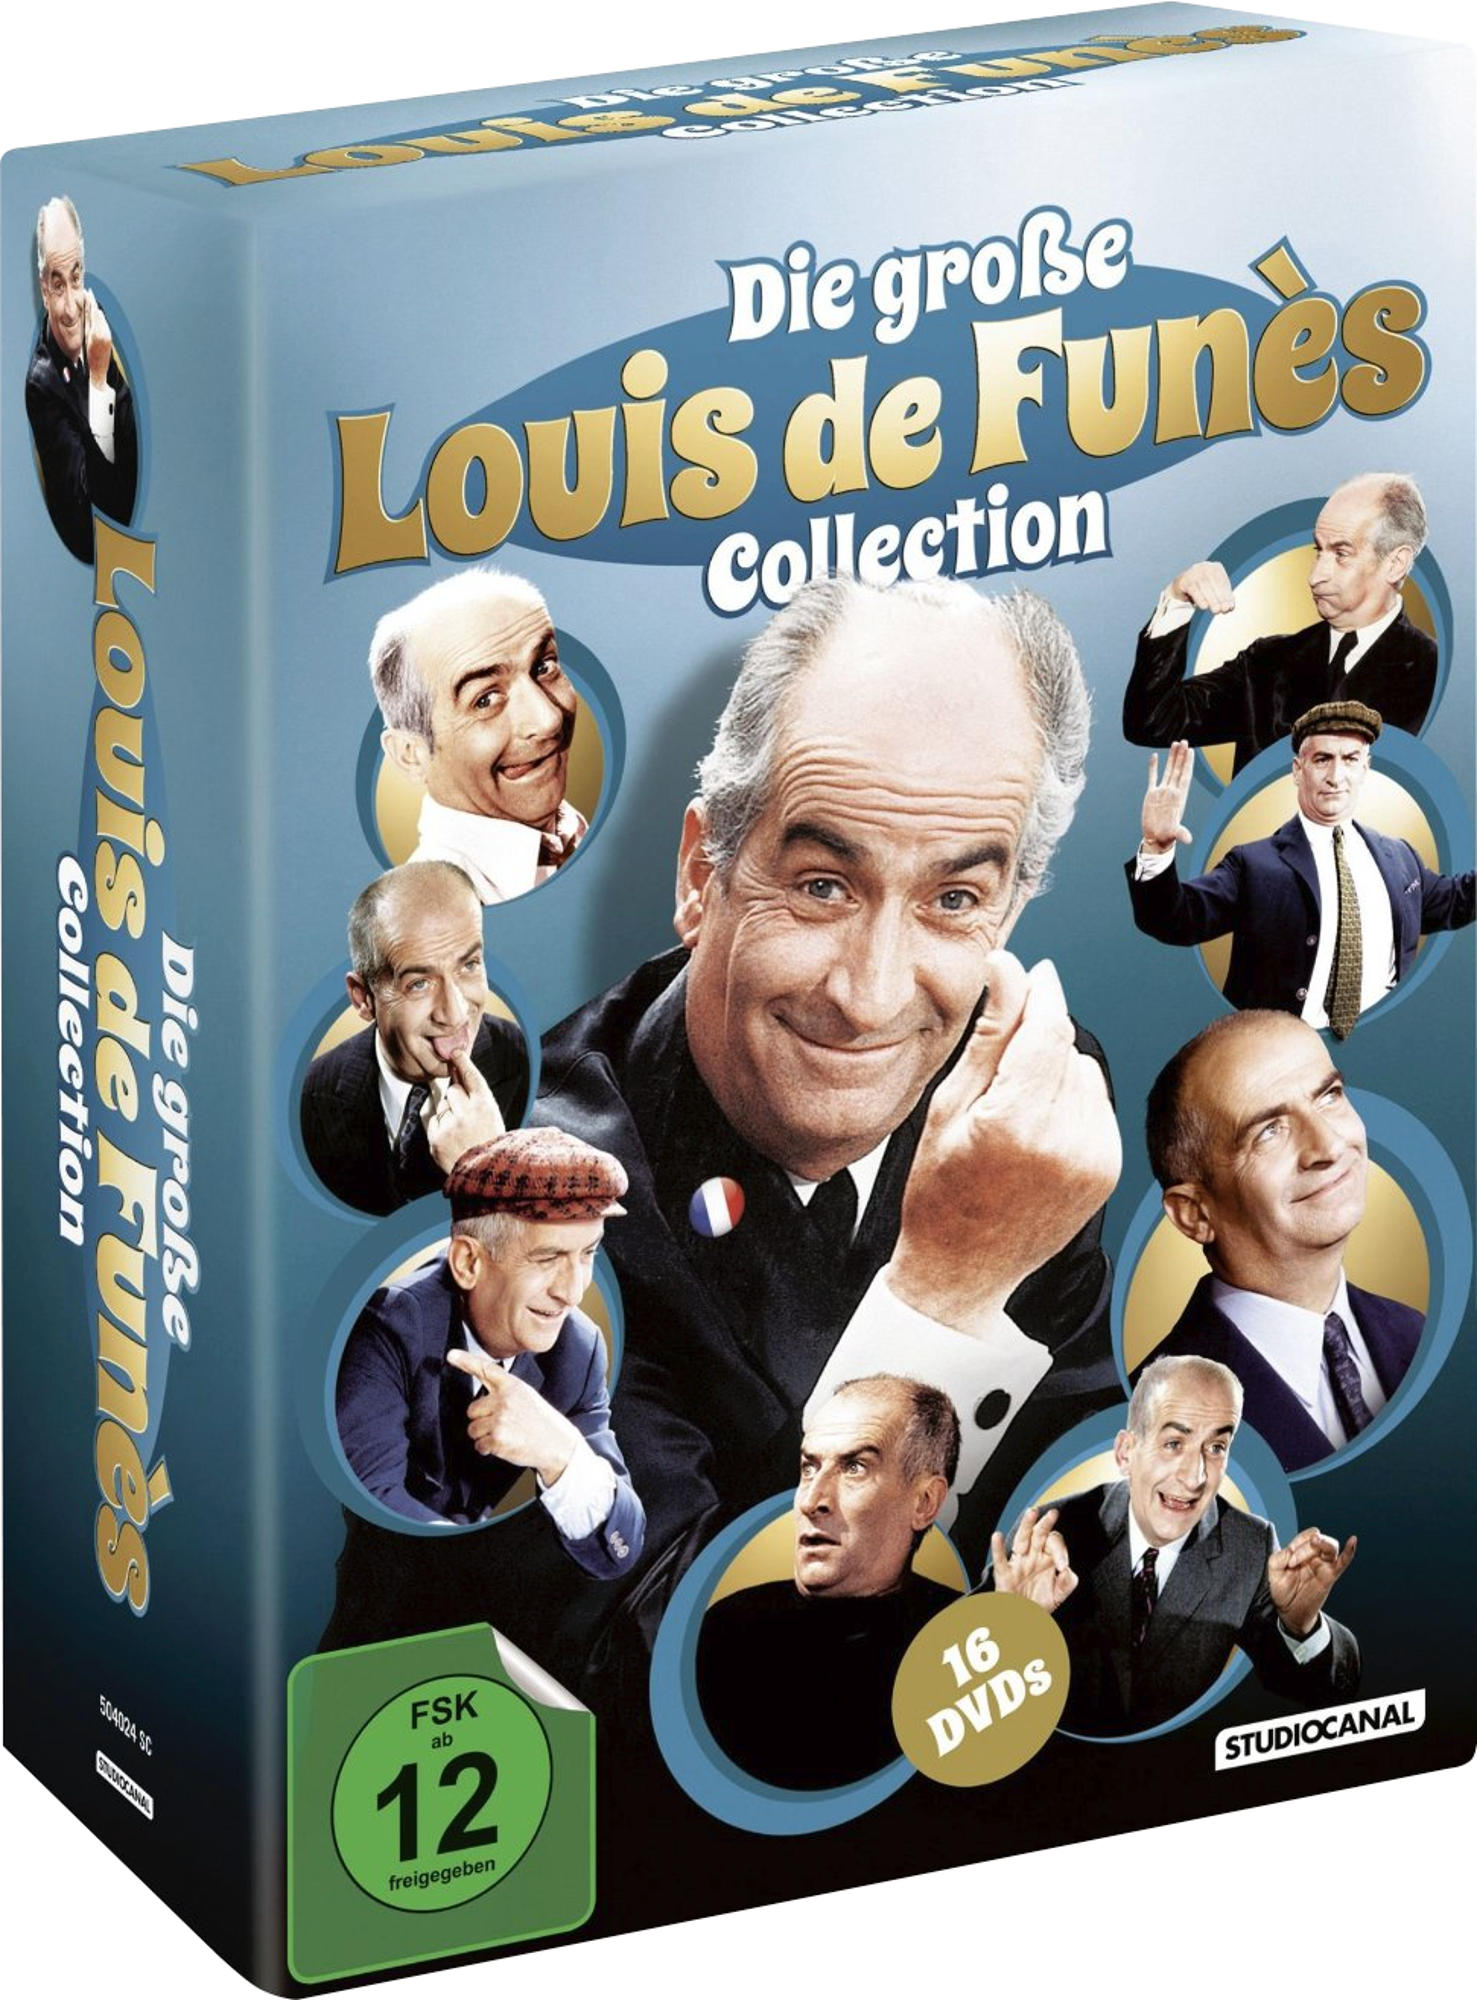 Funes Louis DVD de Collection